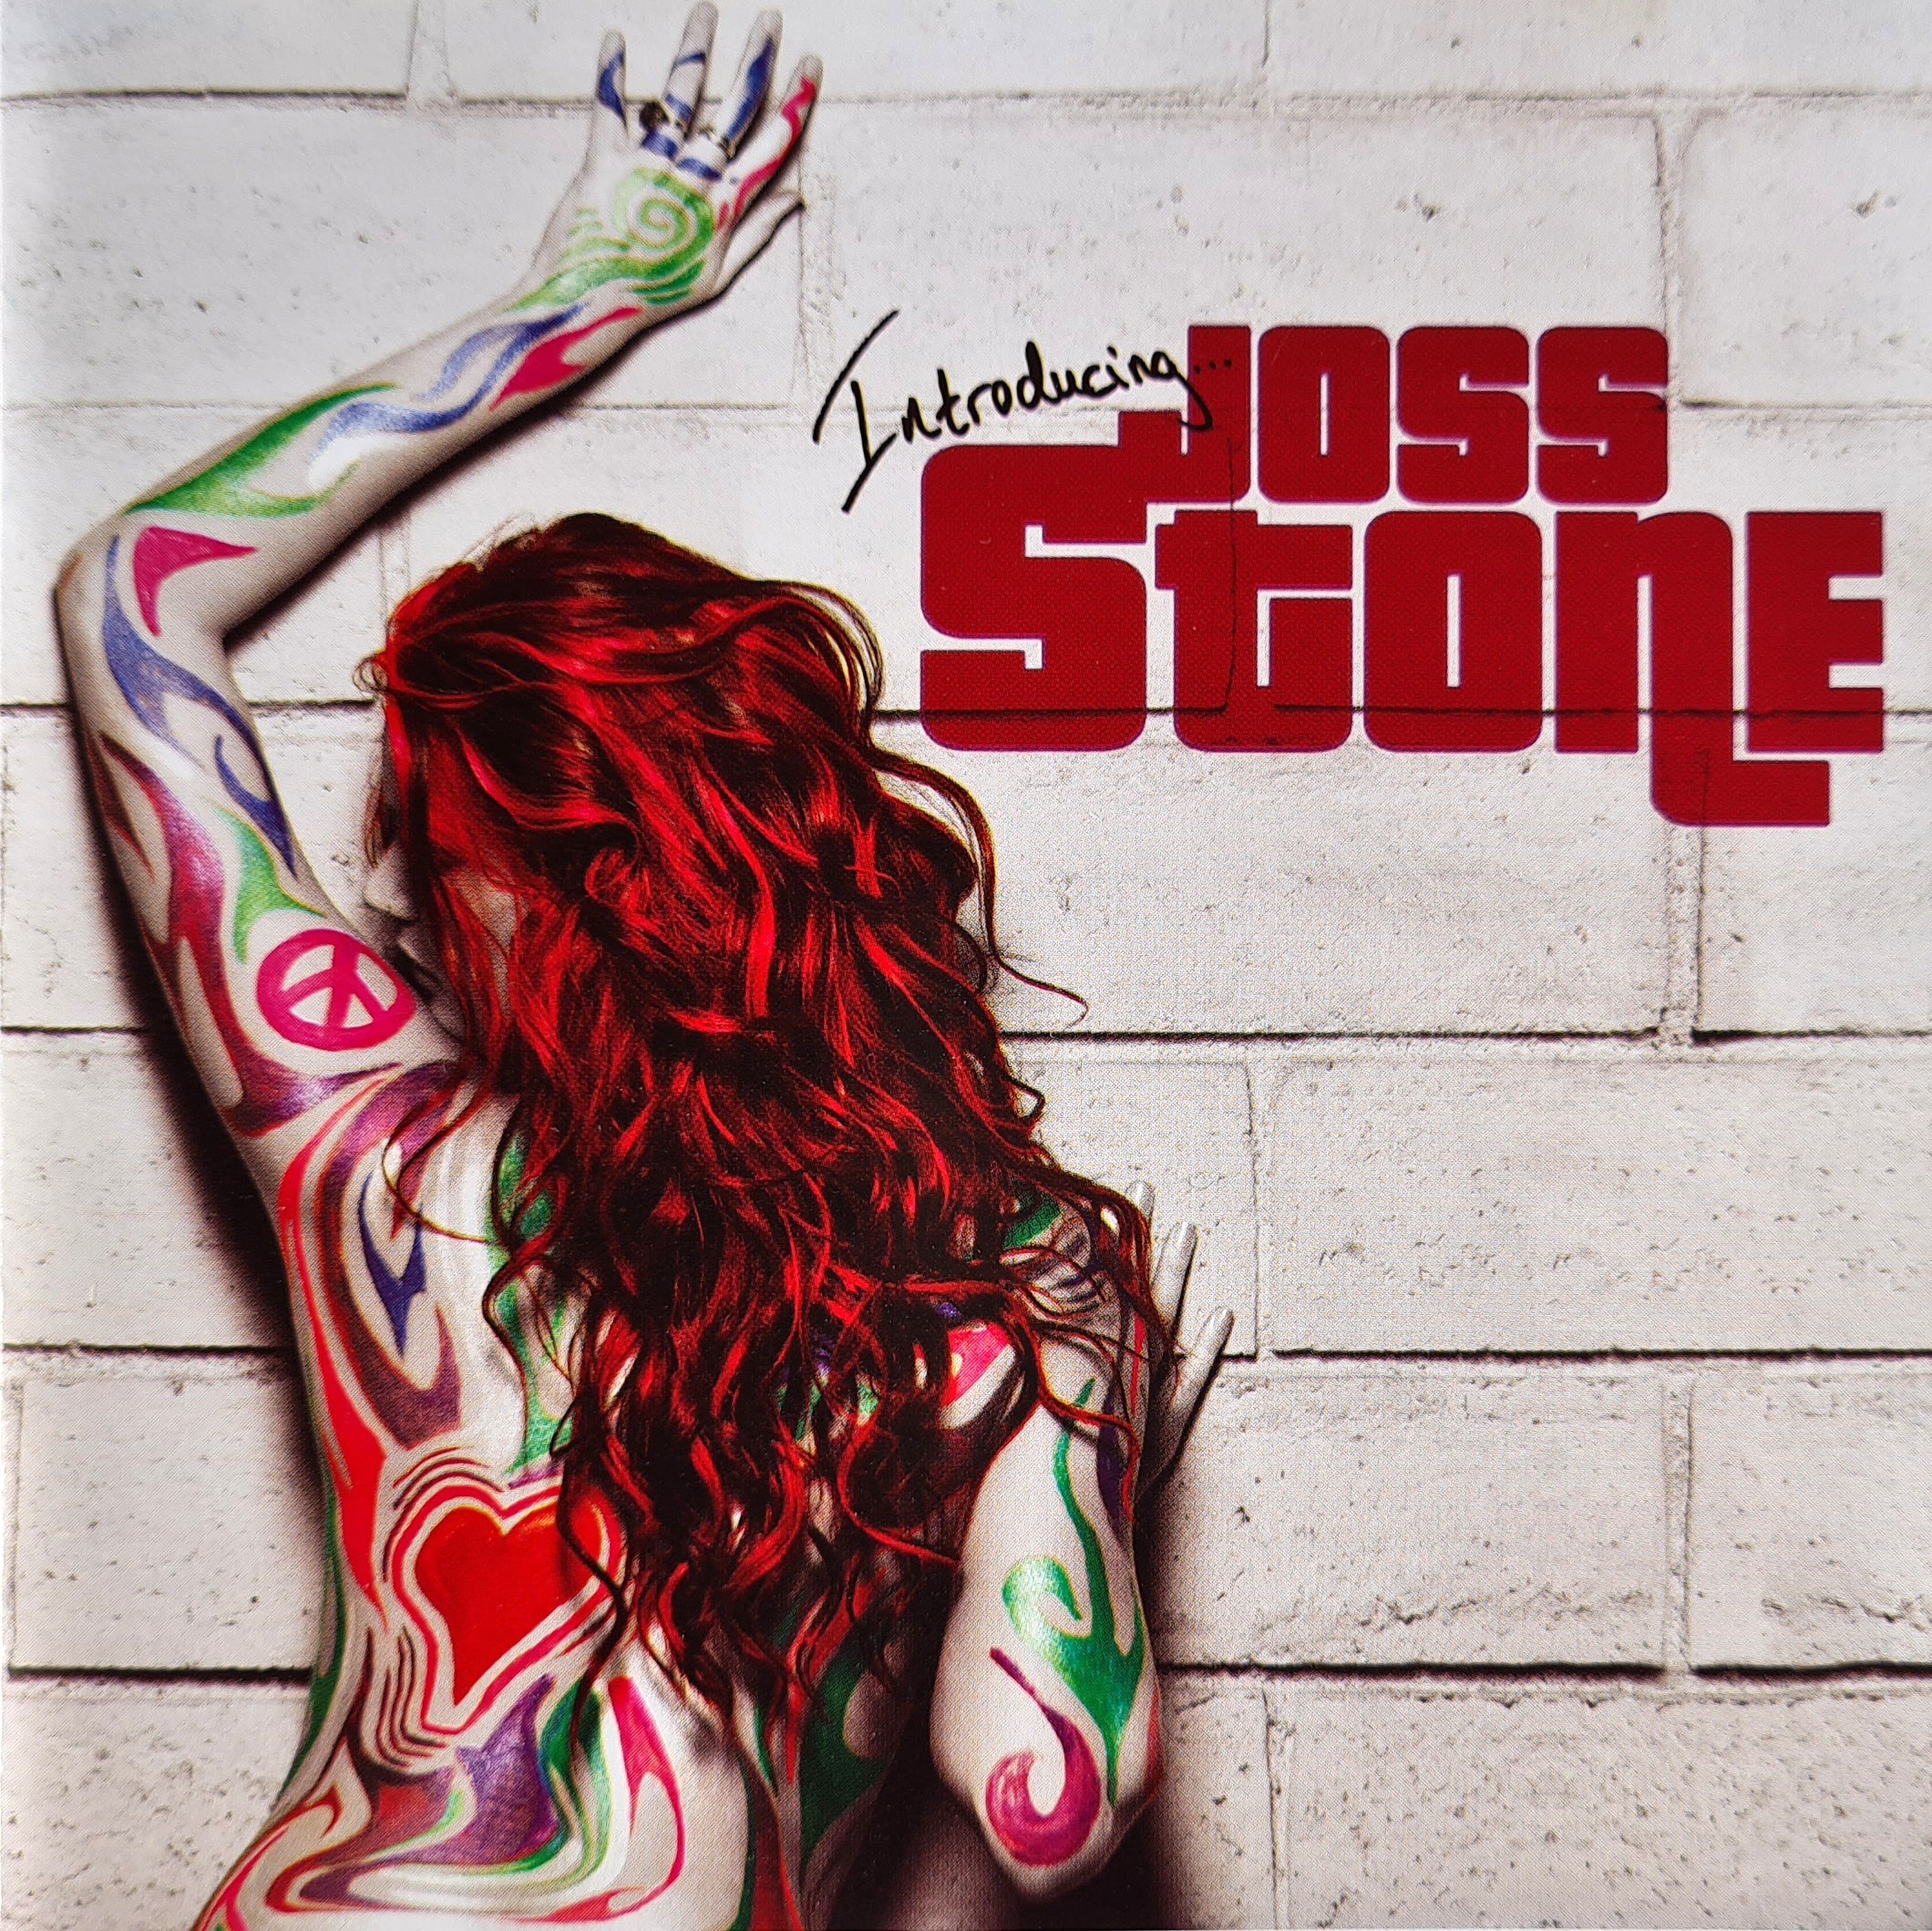 Joss Stone - Introducing Joss Stone (CD)